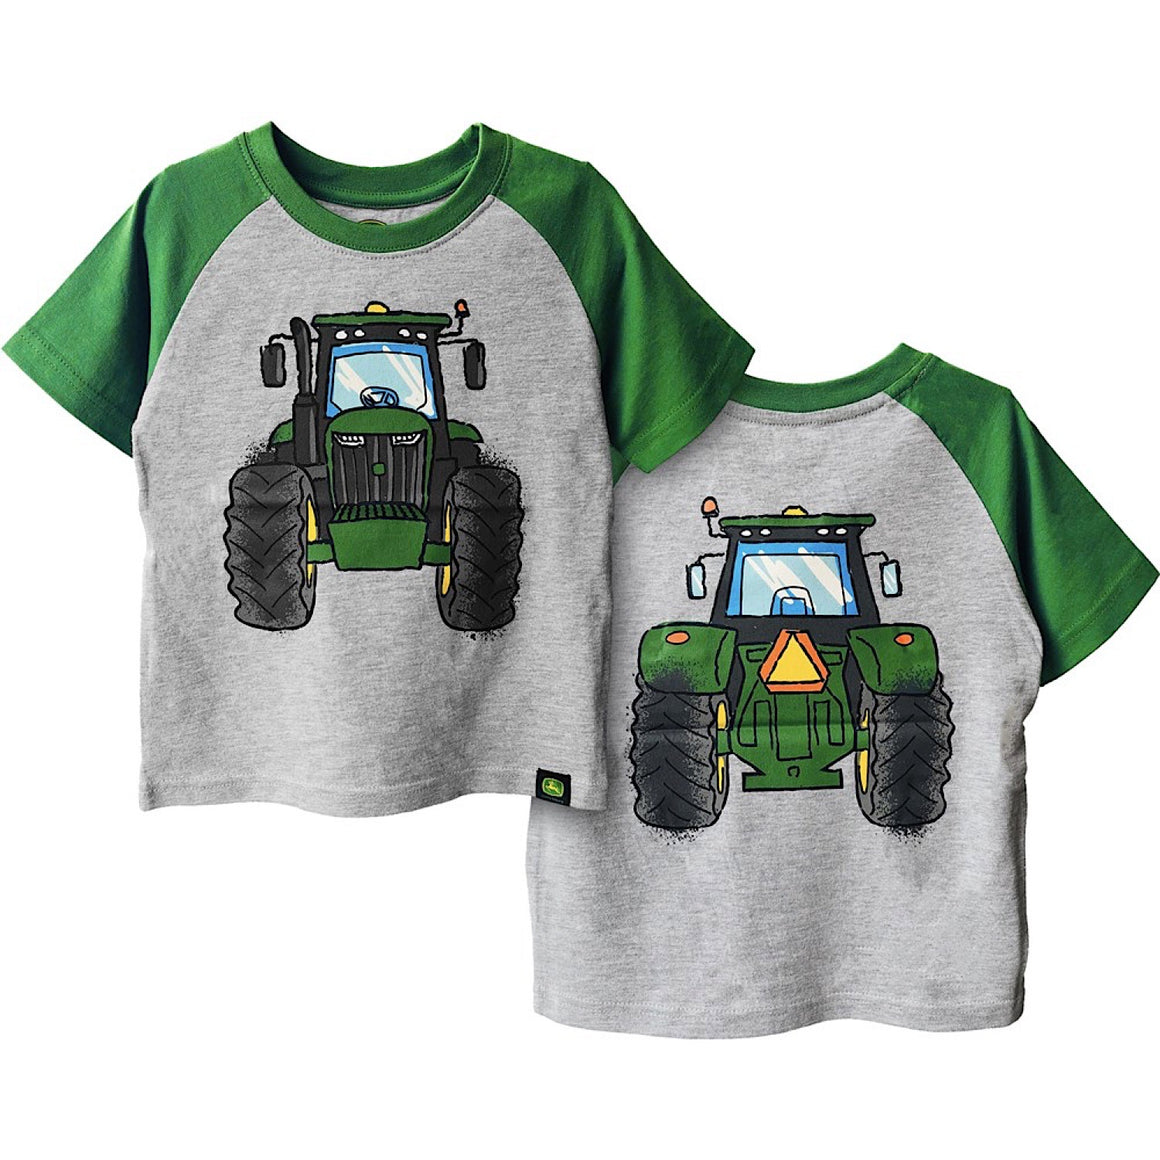 John Deere Toddler Coming and Going T-Shirt - Light Grey/Green